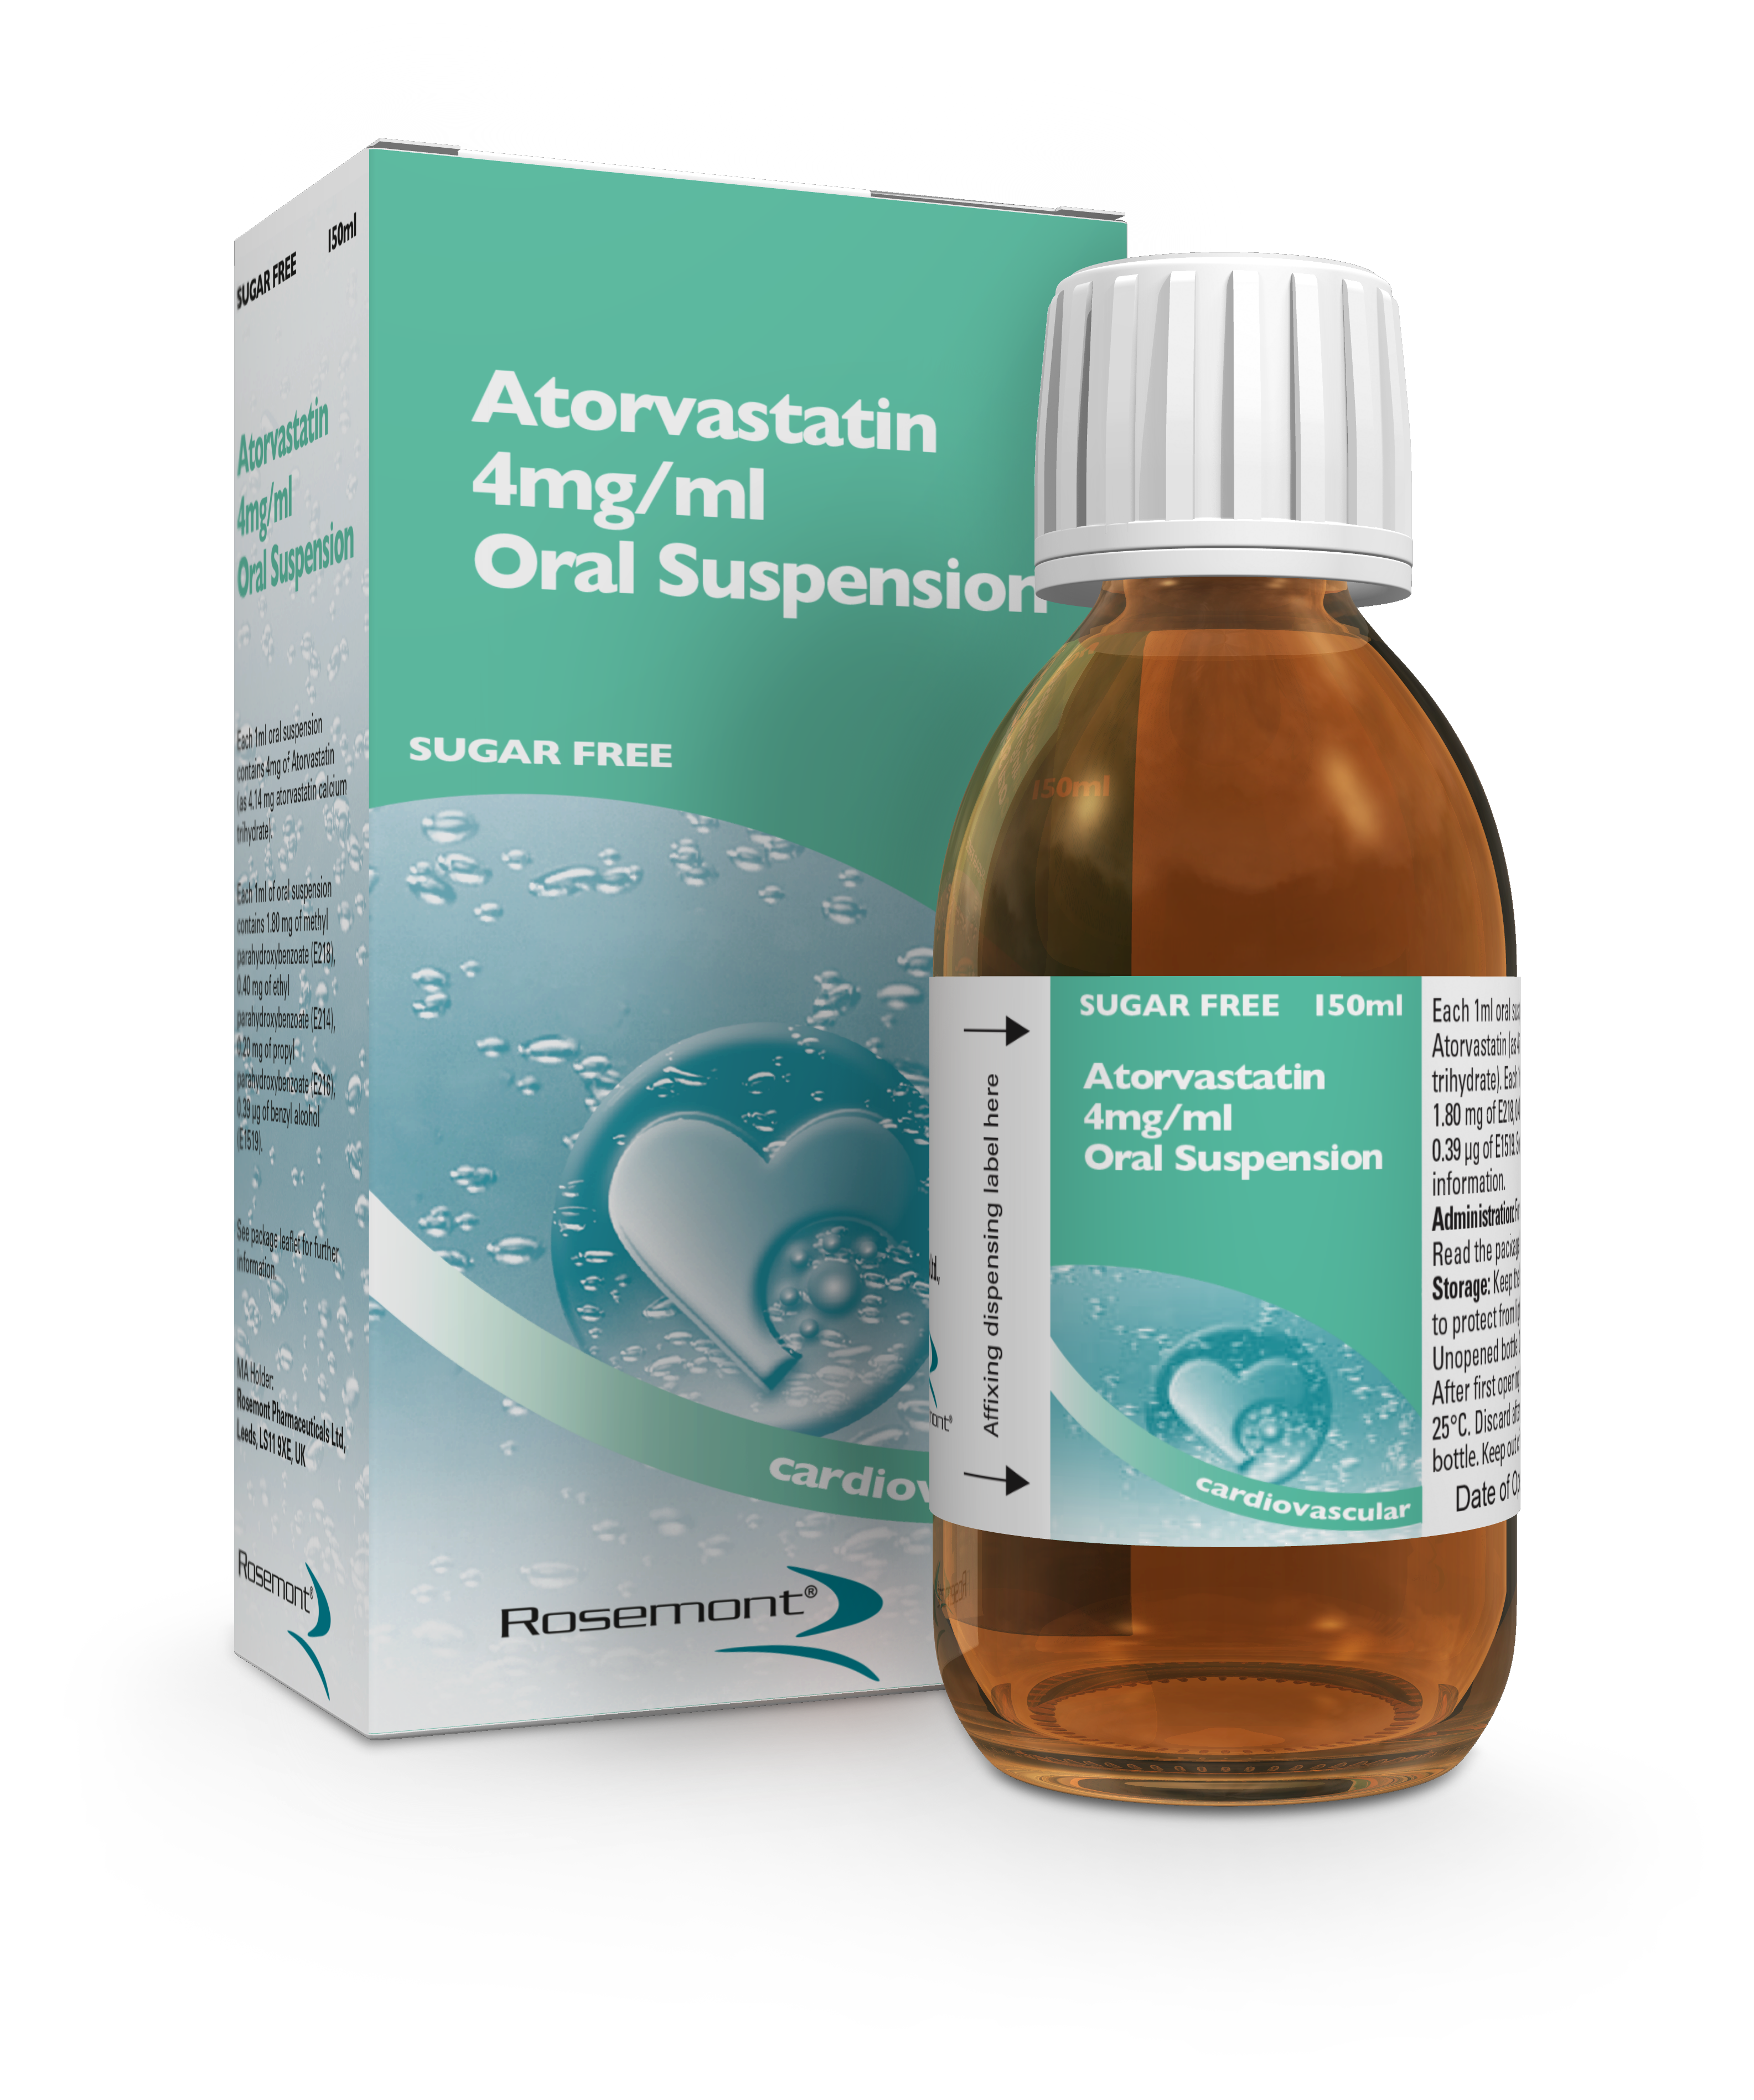 Rosemont Pharmaceuticals - Atorvastatin Bottle & Carton